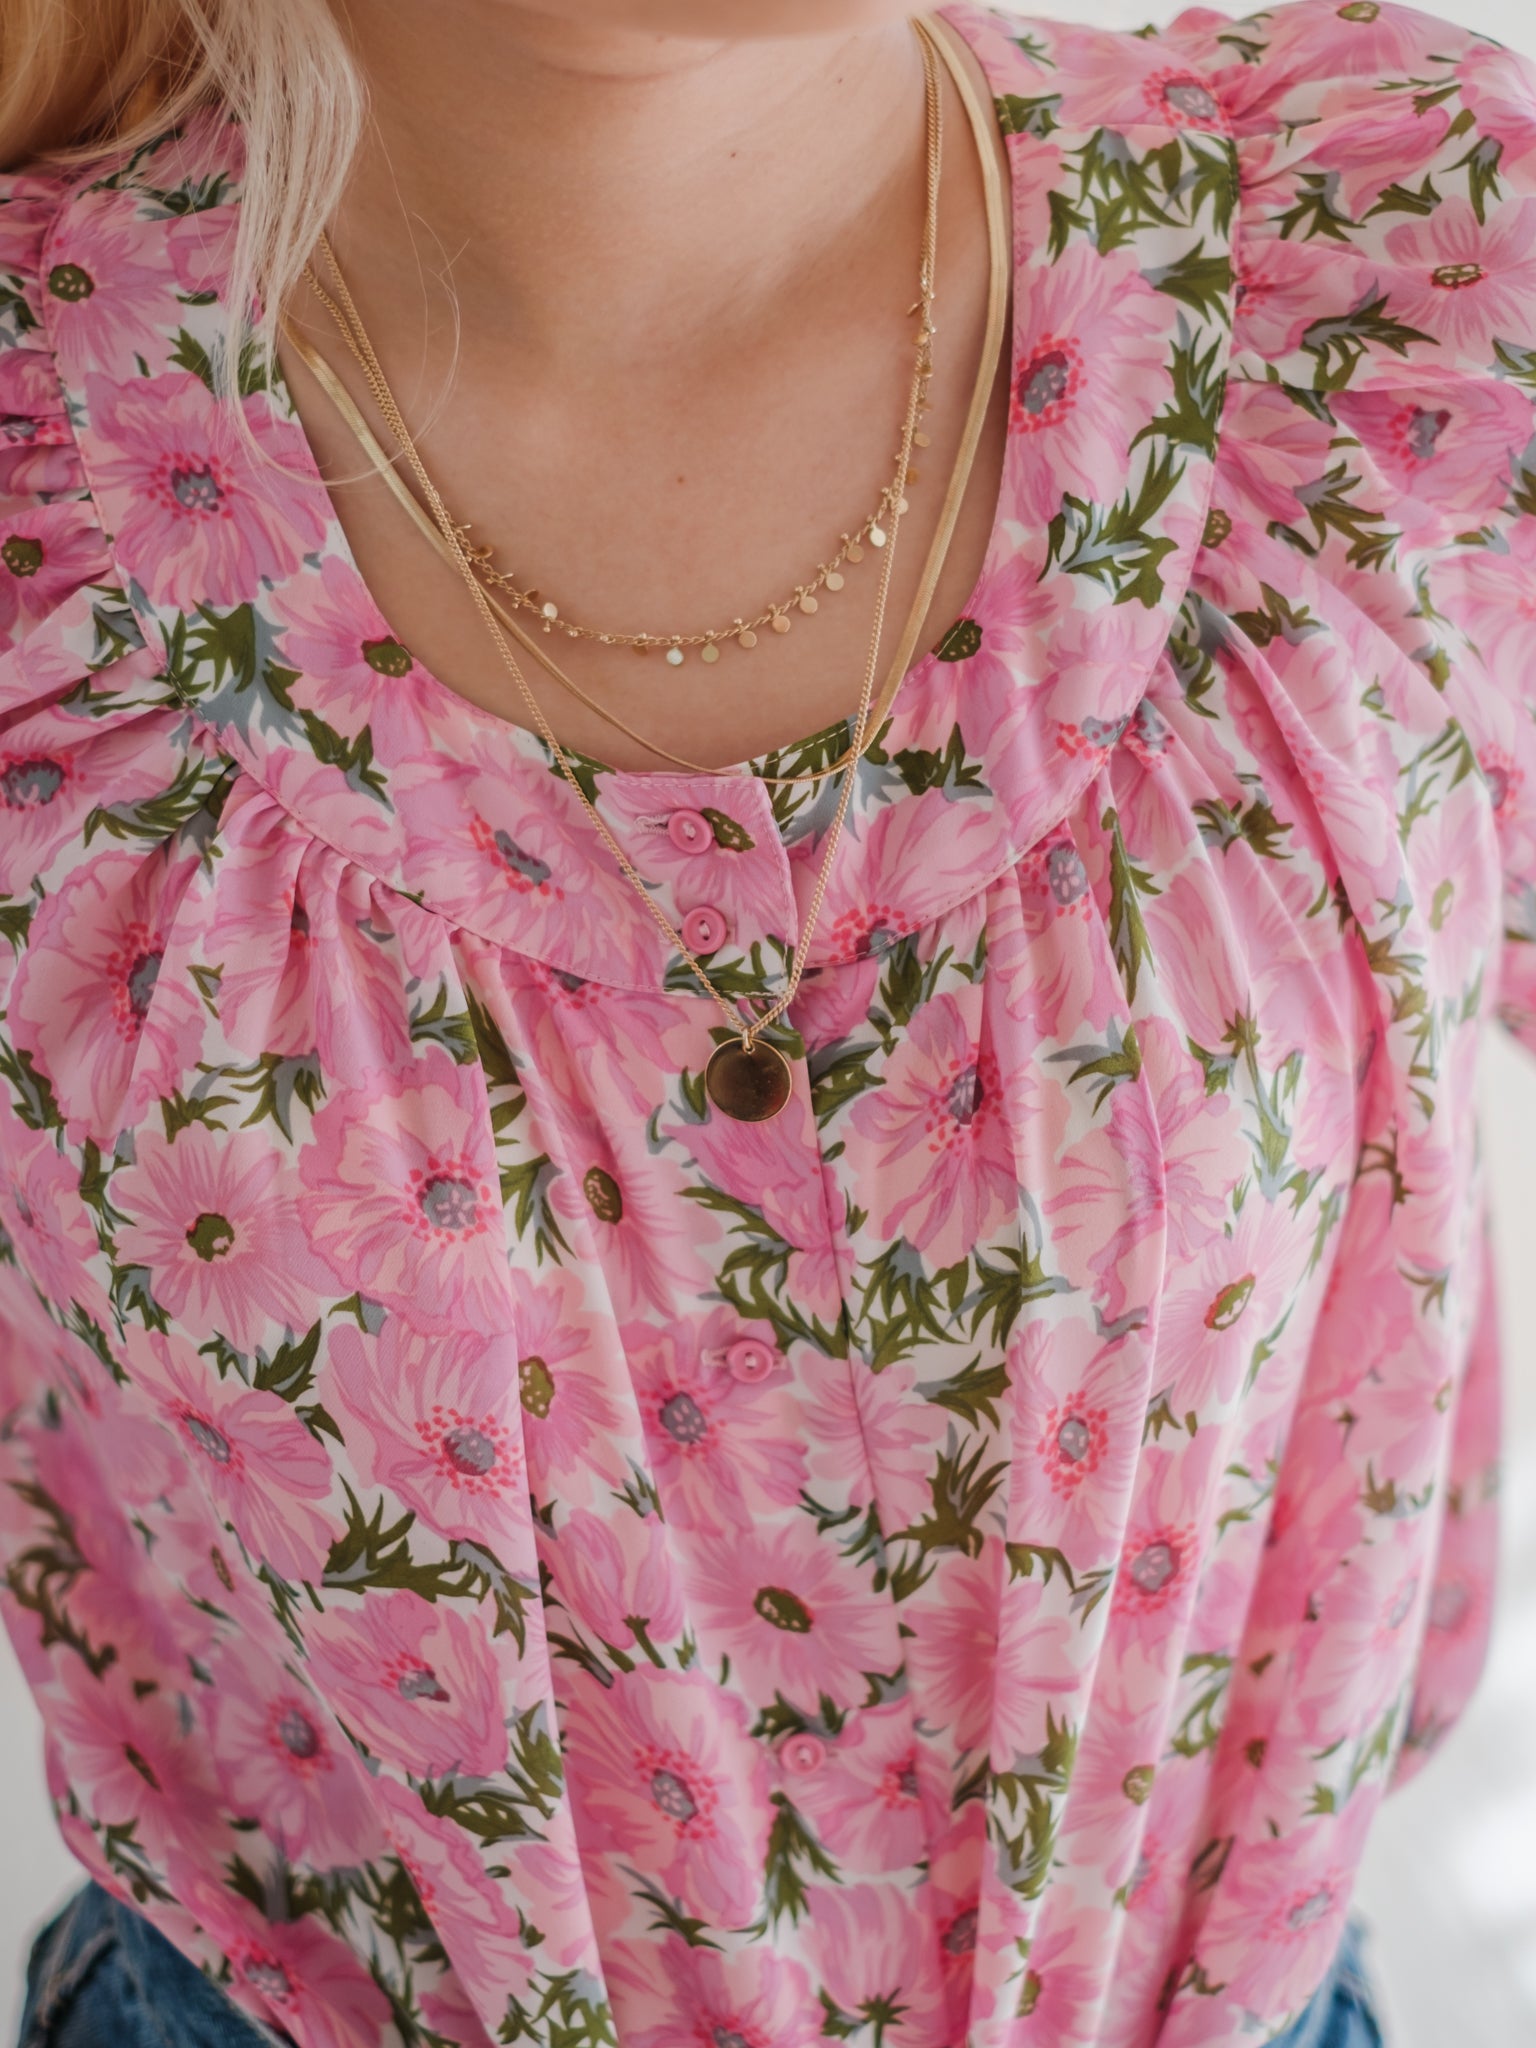 Vintage floral chiffon blouse